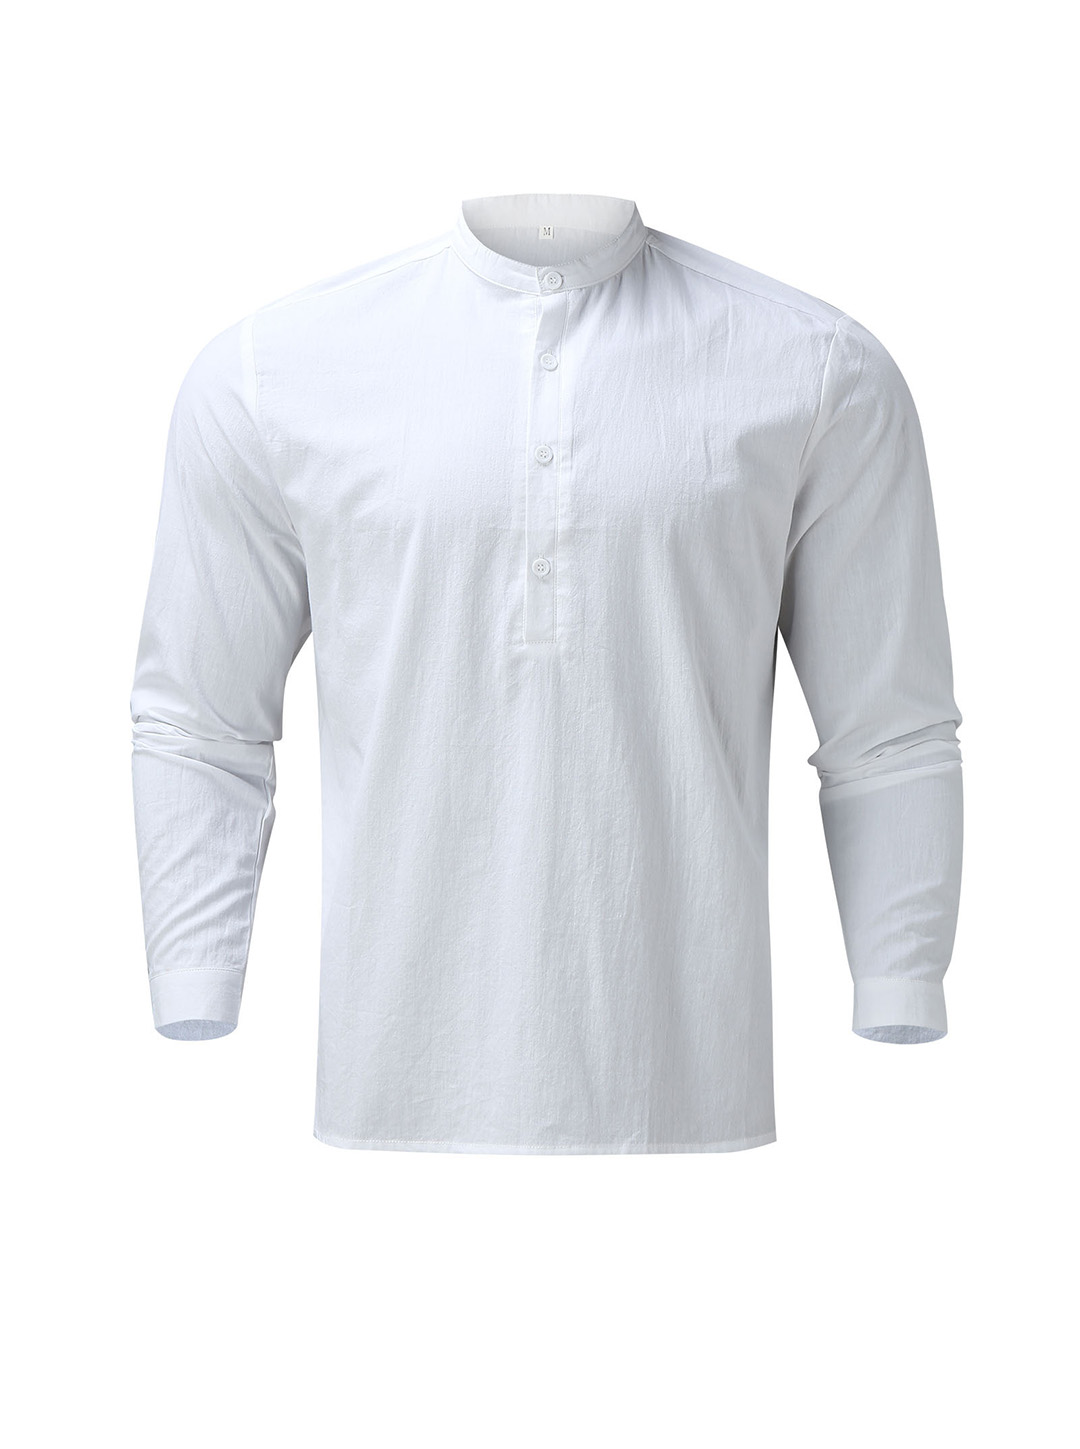 Men's Reyes Cotton and Linen Solid Henley Collar Shirt-poisonstreetwear.com